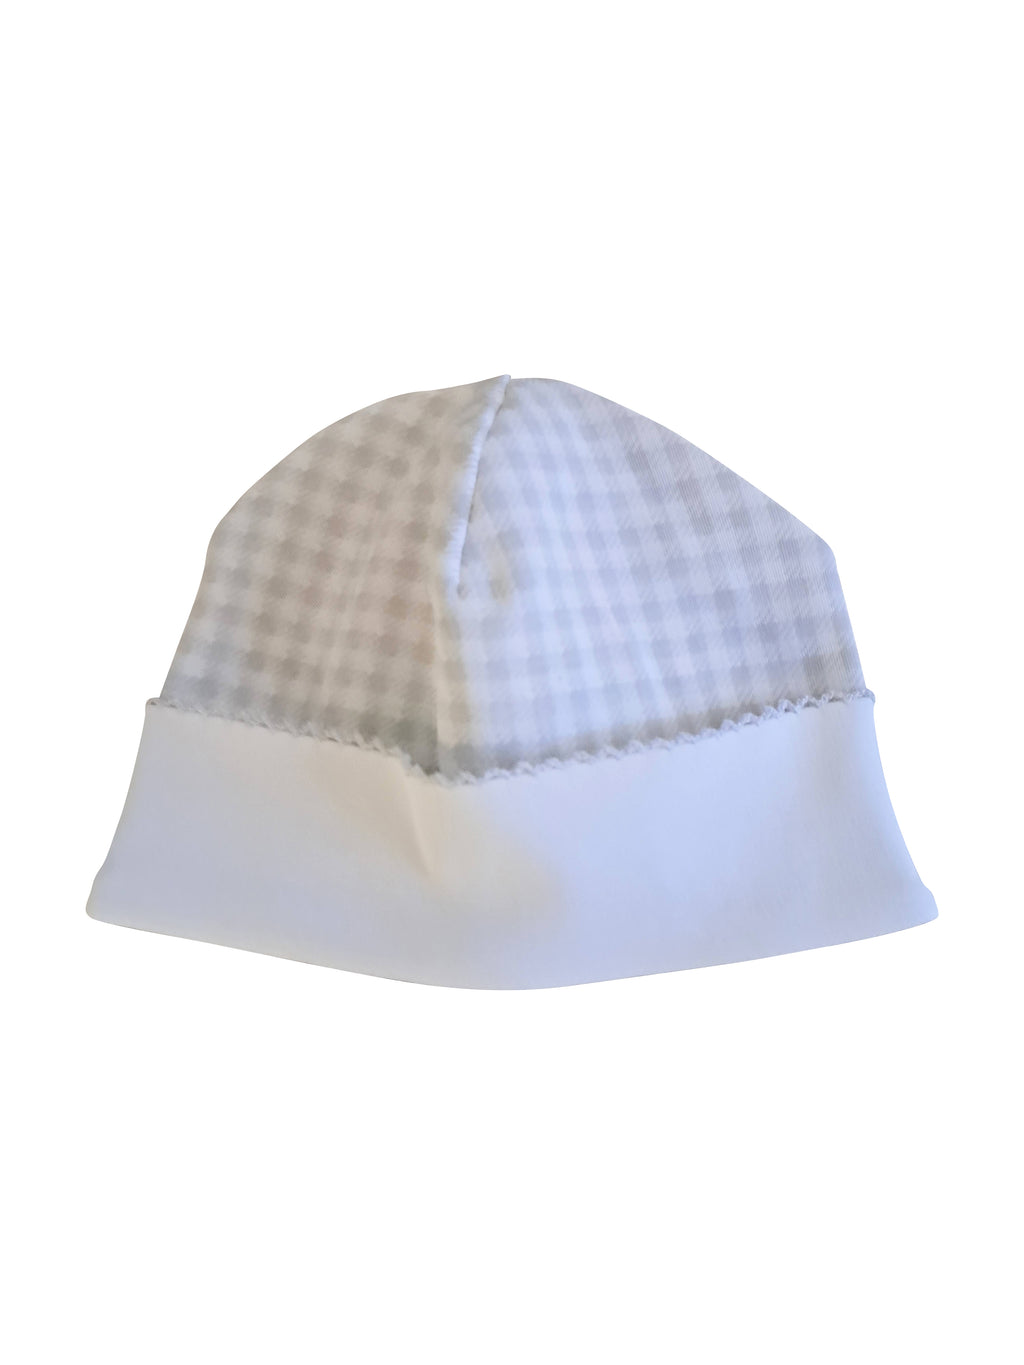 Baby's "Grey Checks" Unisex Pima Cotton Hat - Little Threads Inc. Children's Clothing